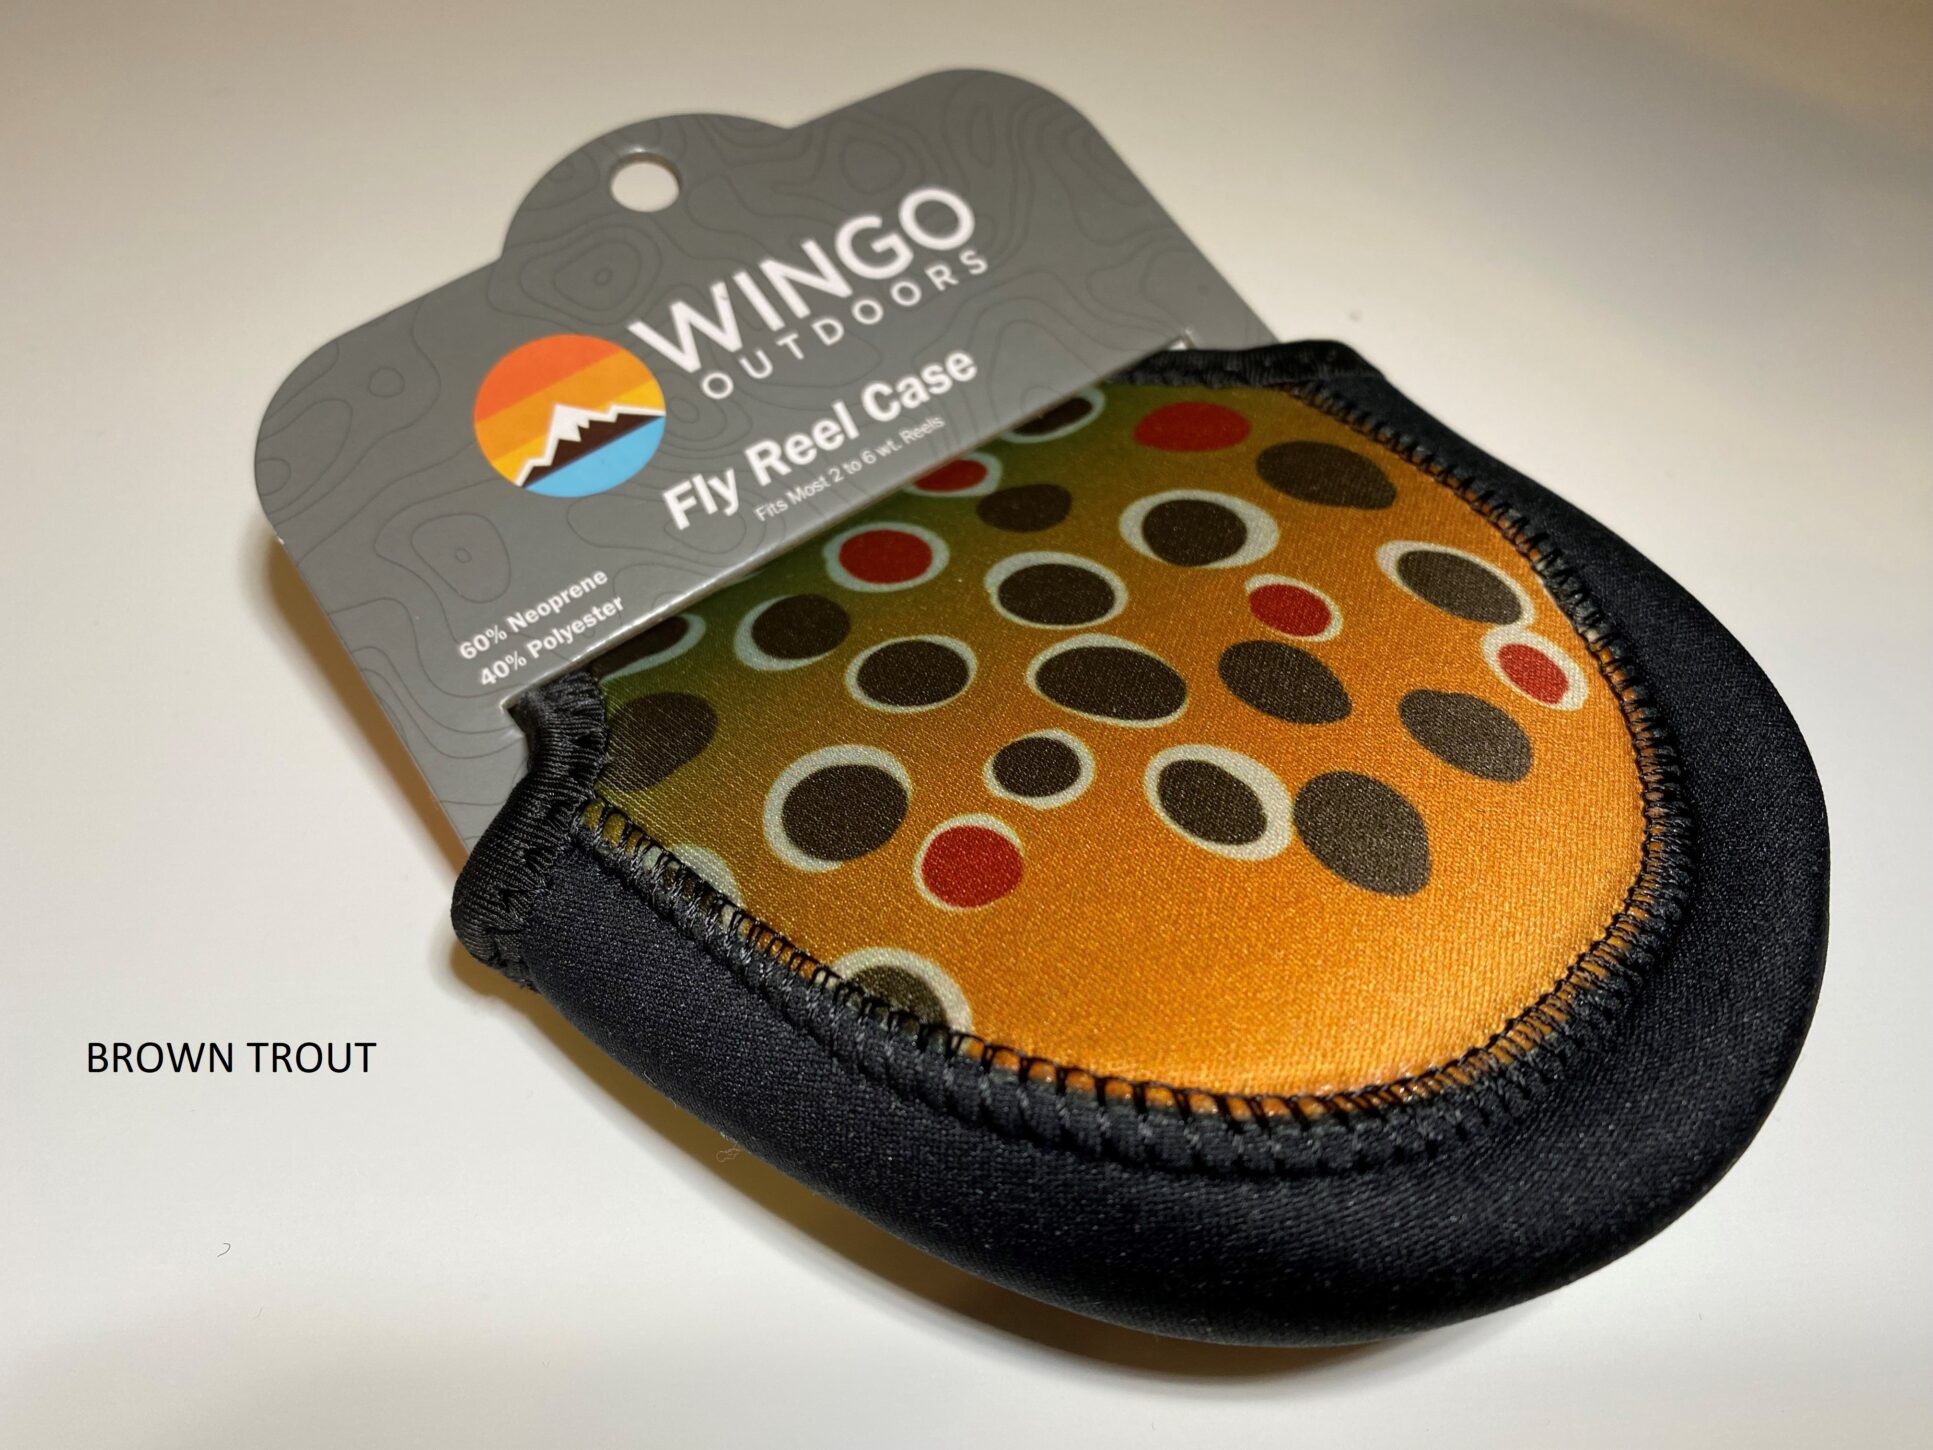 Wingo Outdoors Fish Fly Reel Case